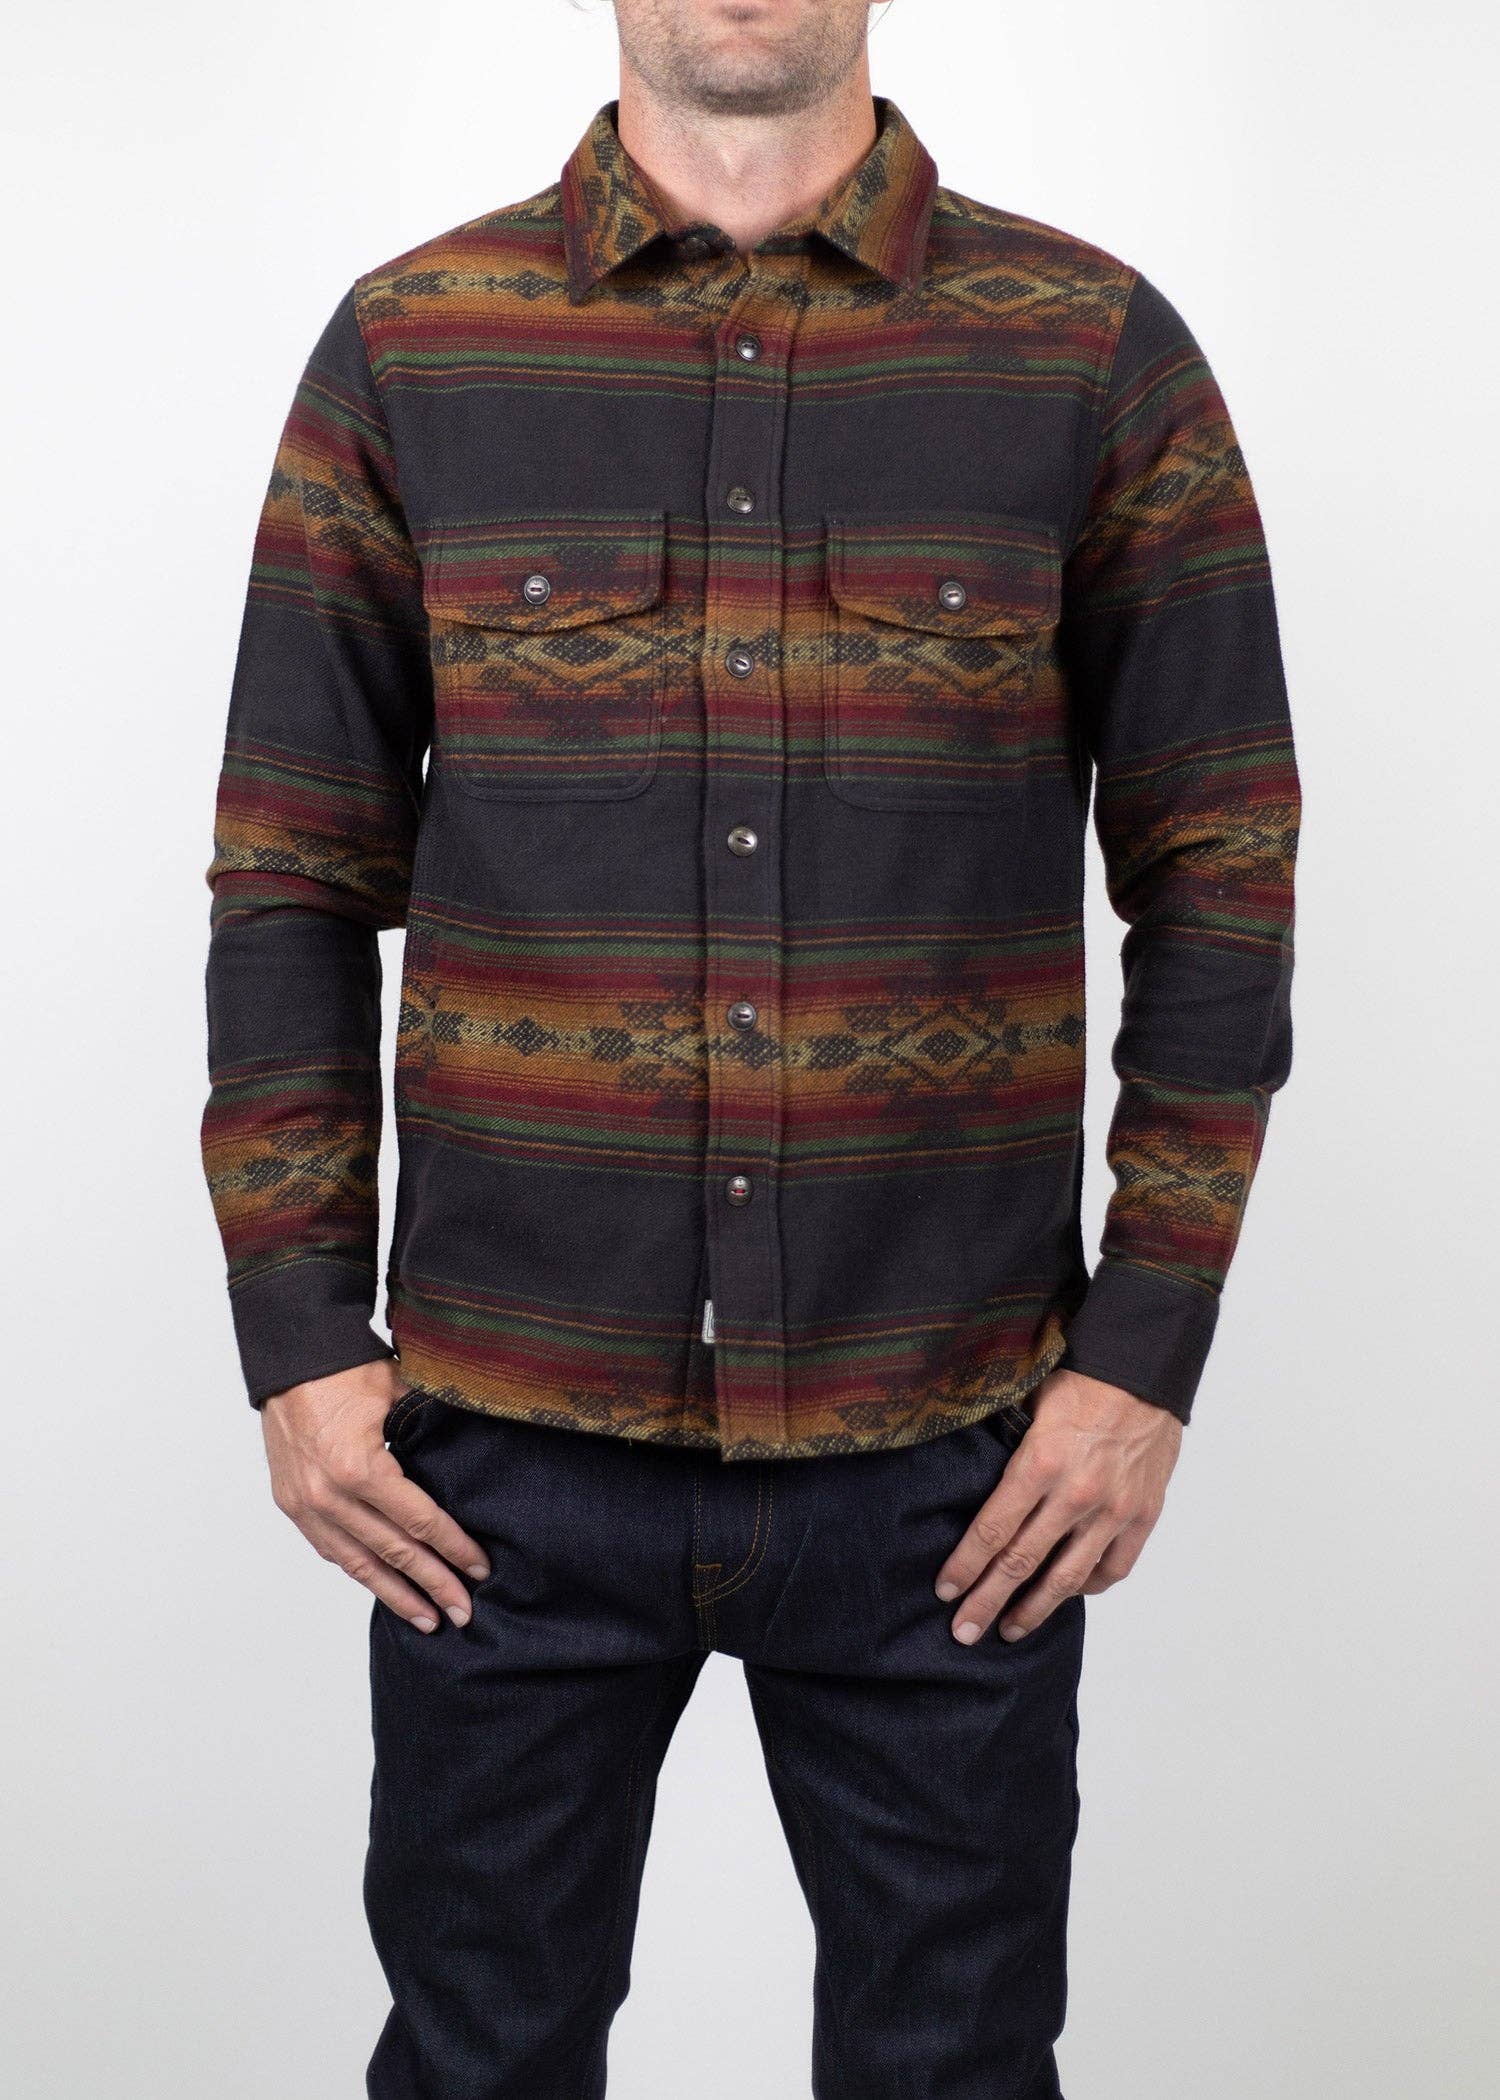 Klamath Flannel Shirt: Natural